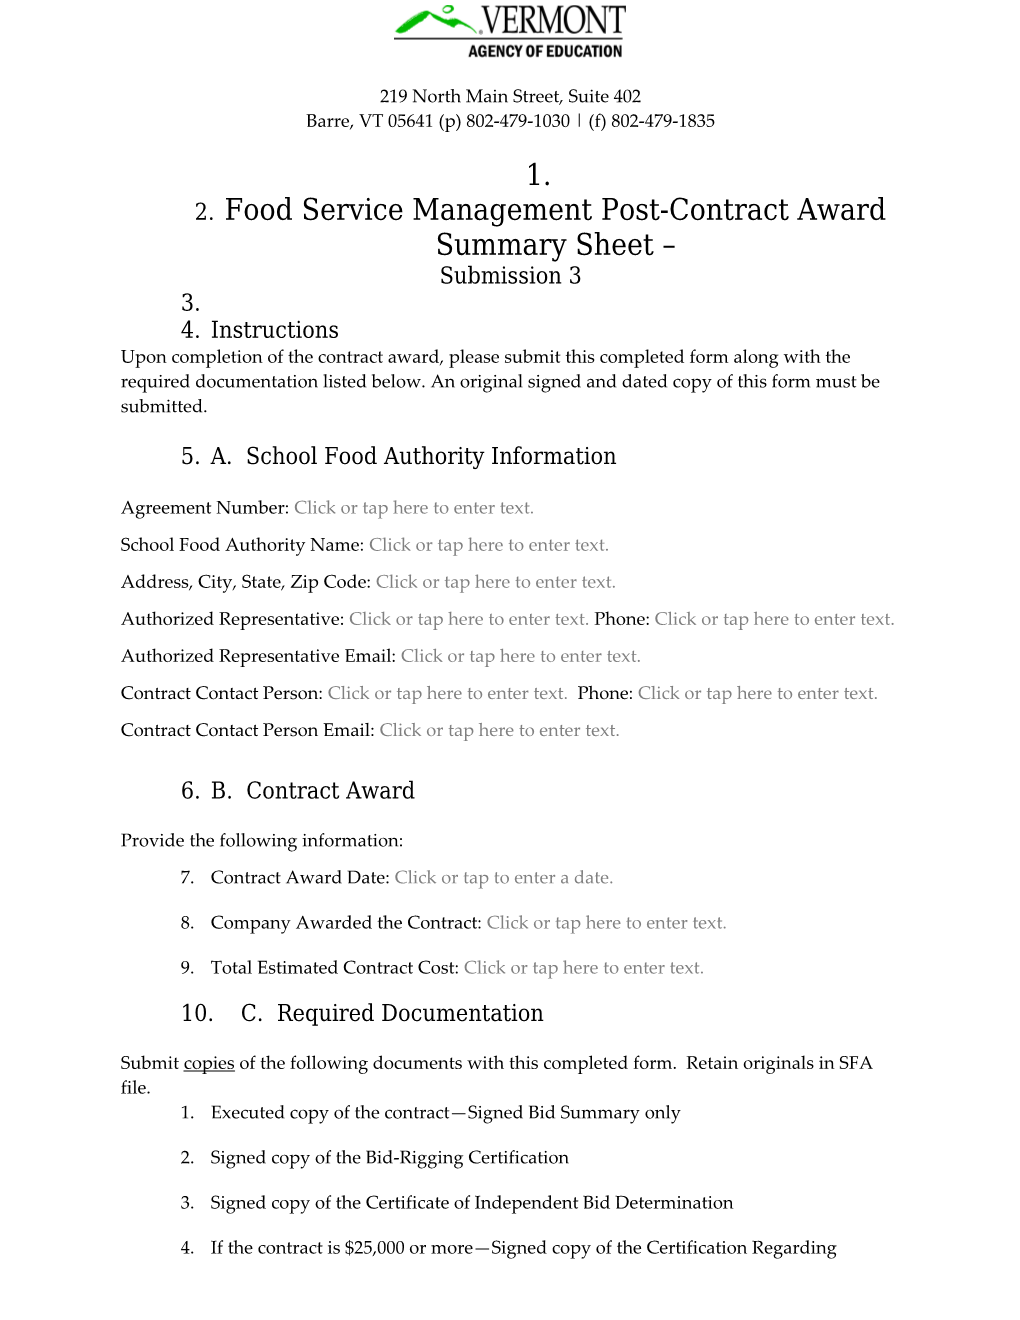 FSMC Post Contract Award